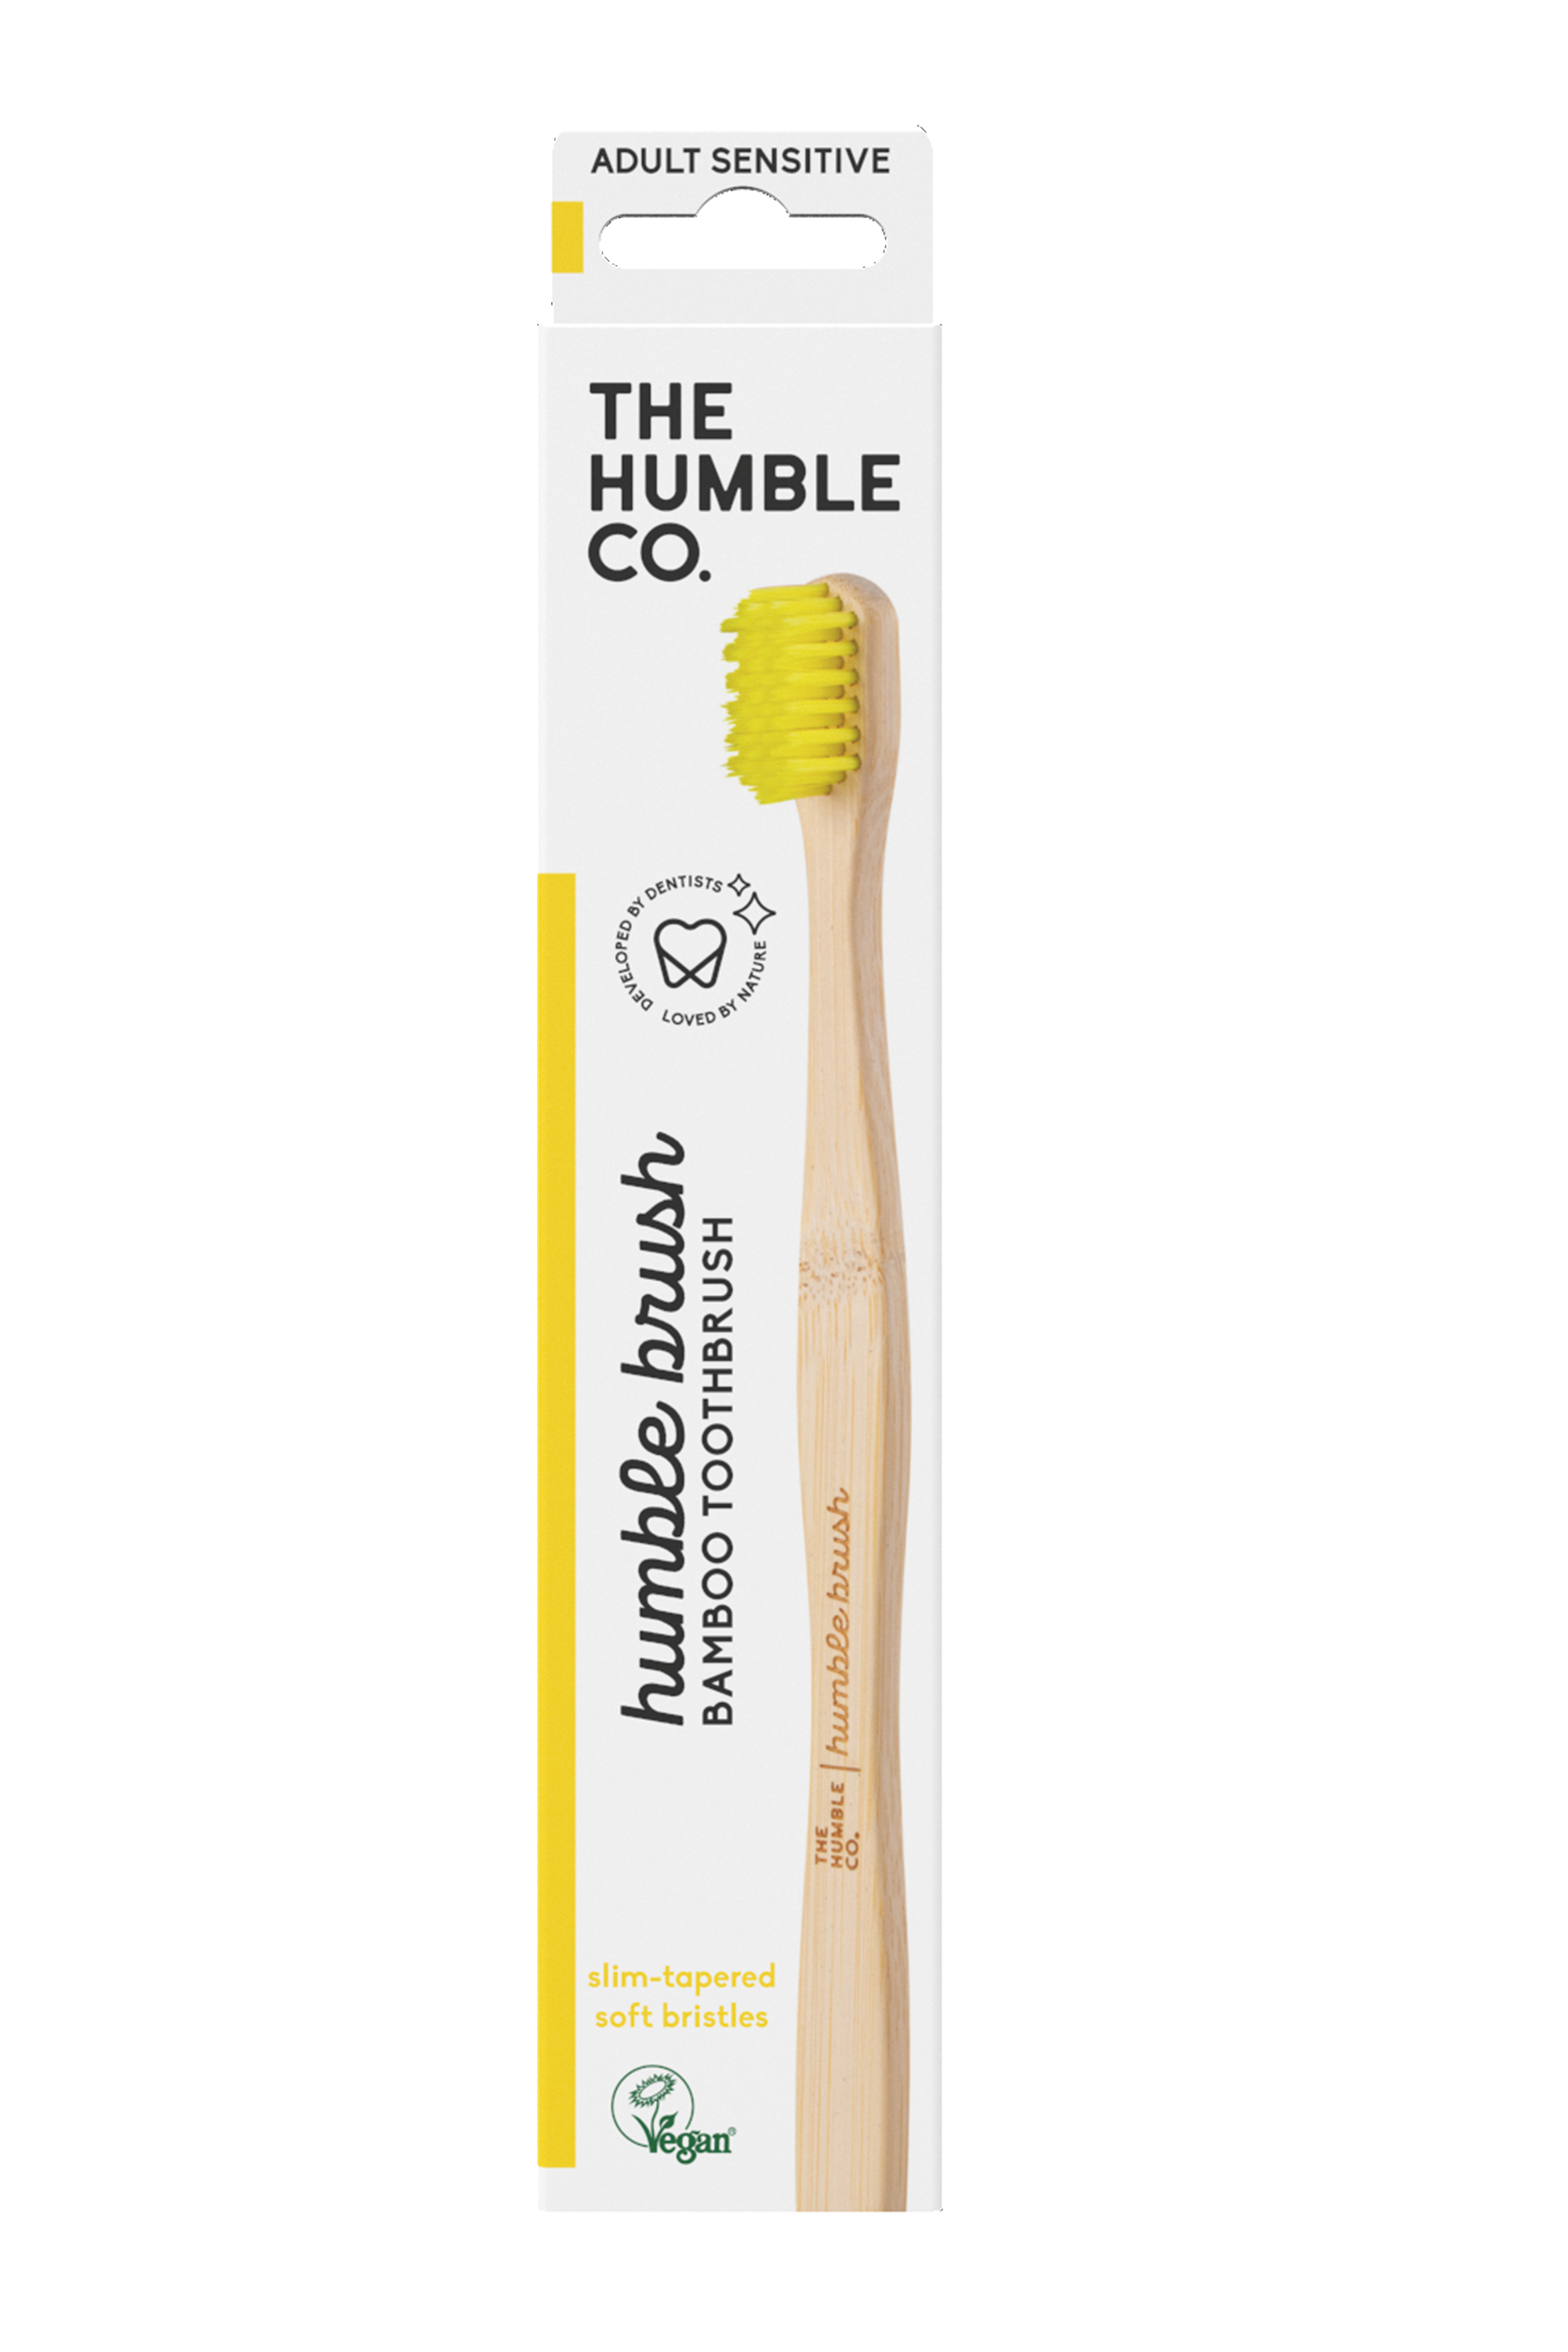 The Humble Co. Brush Adult Sensitive, Yellow, 1 stk.